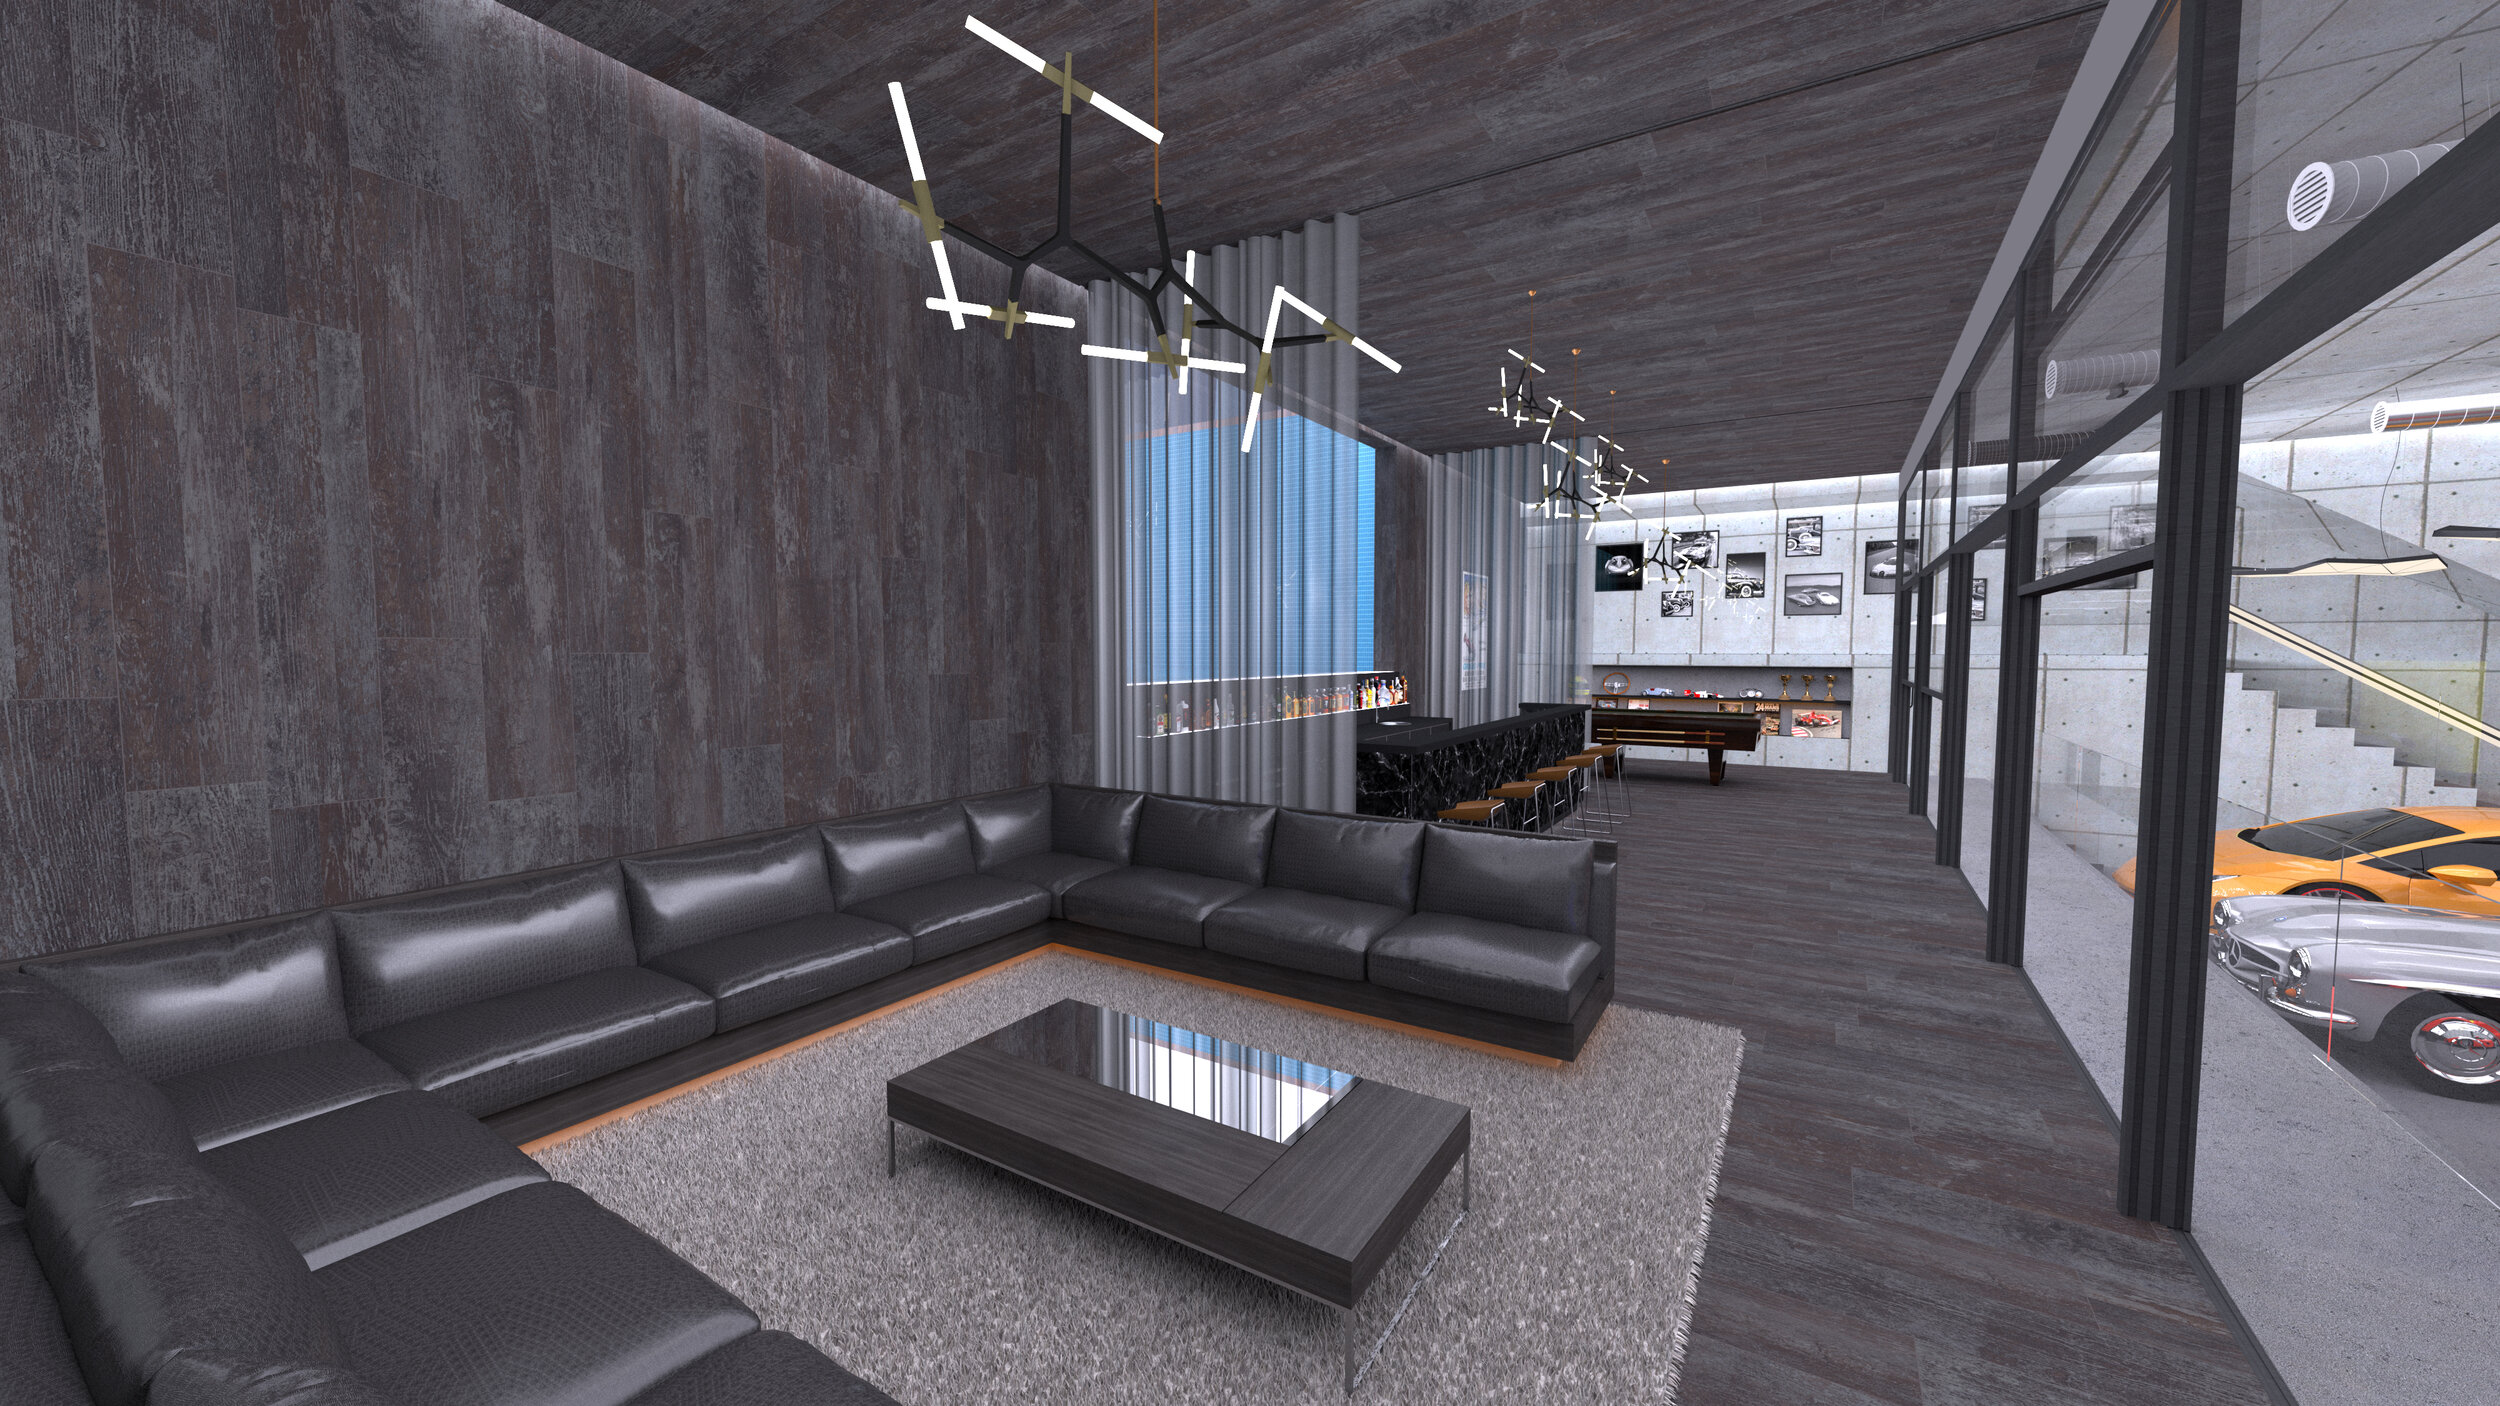 249-MegaBasement-Interior View-Lounge.jpg